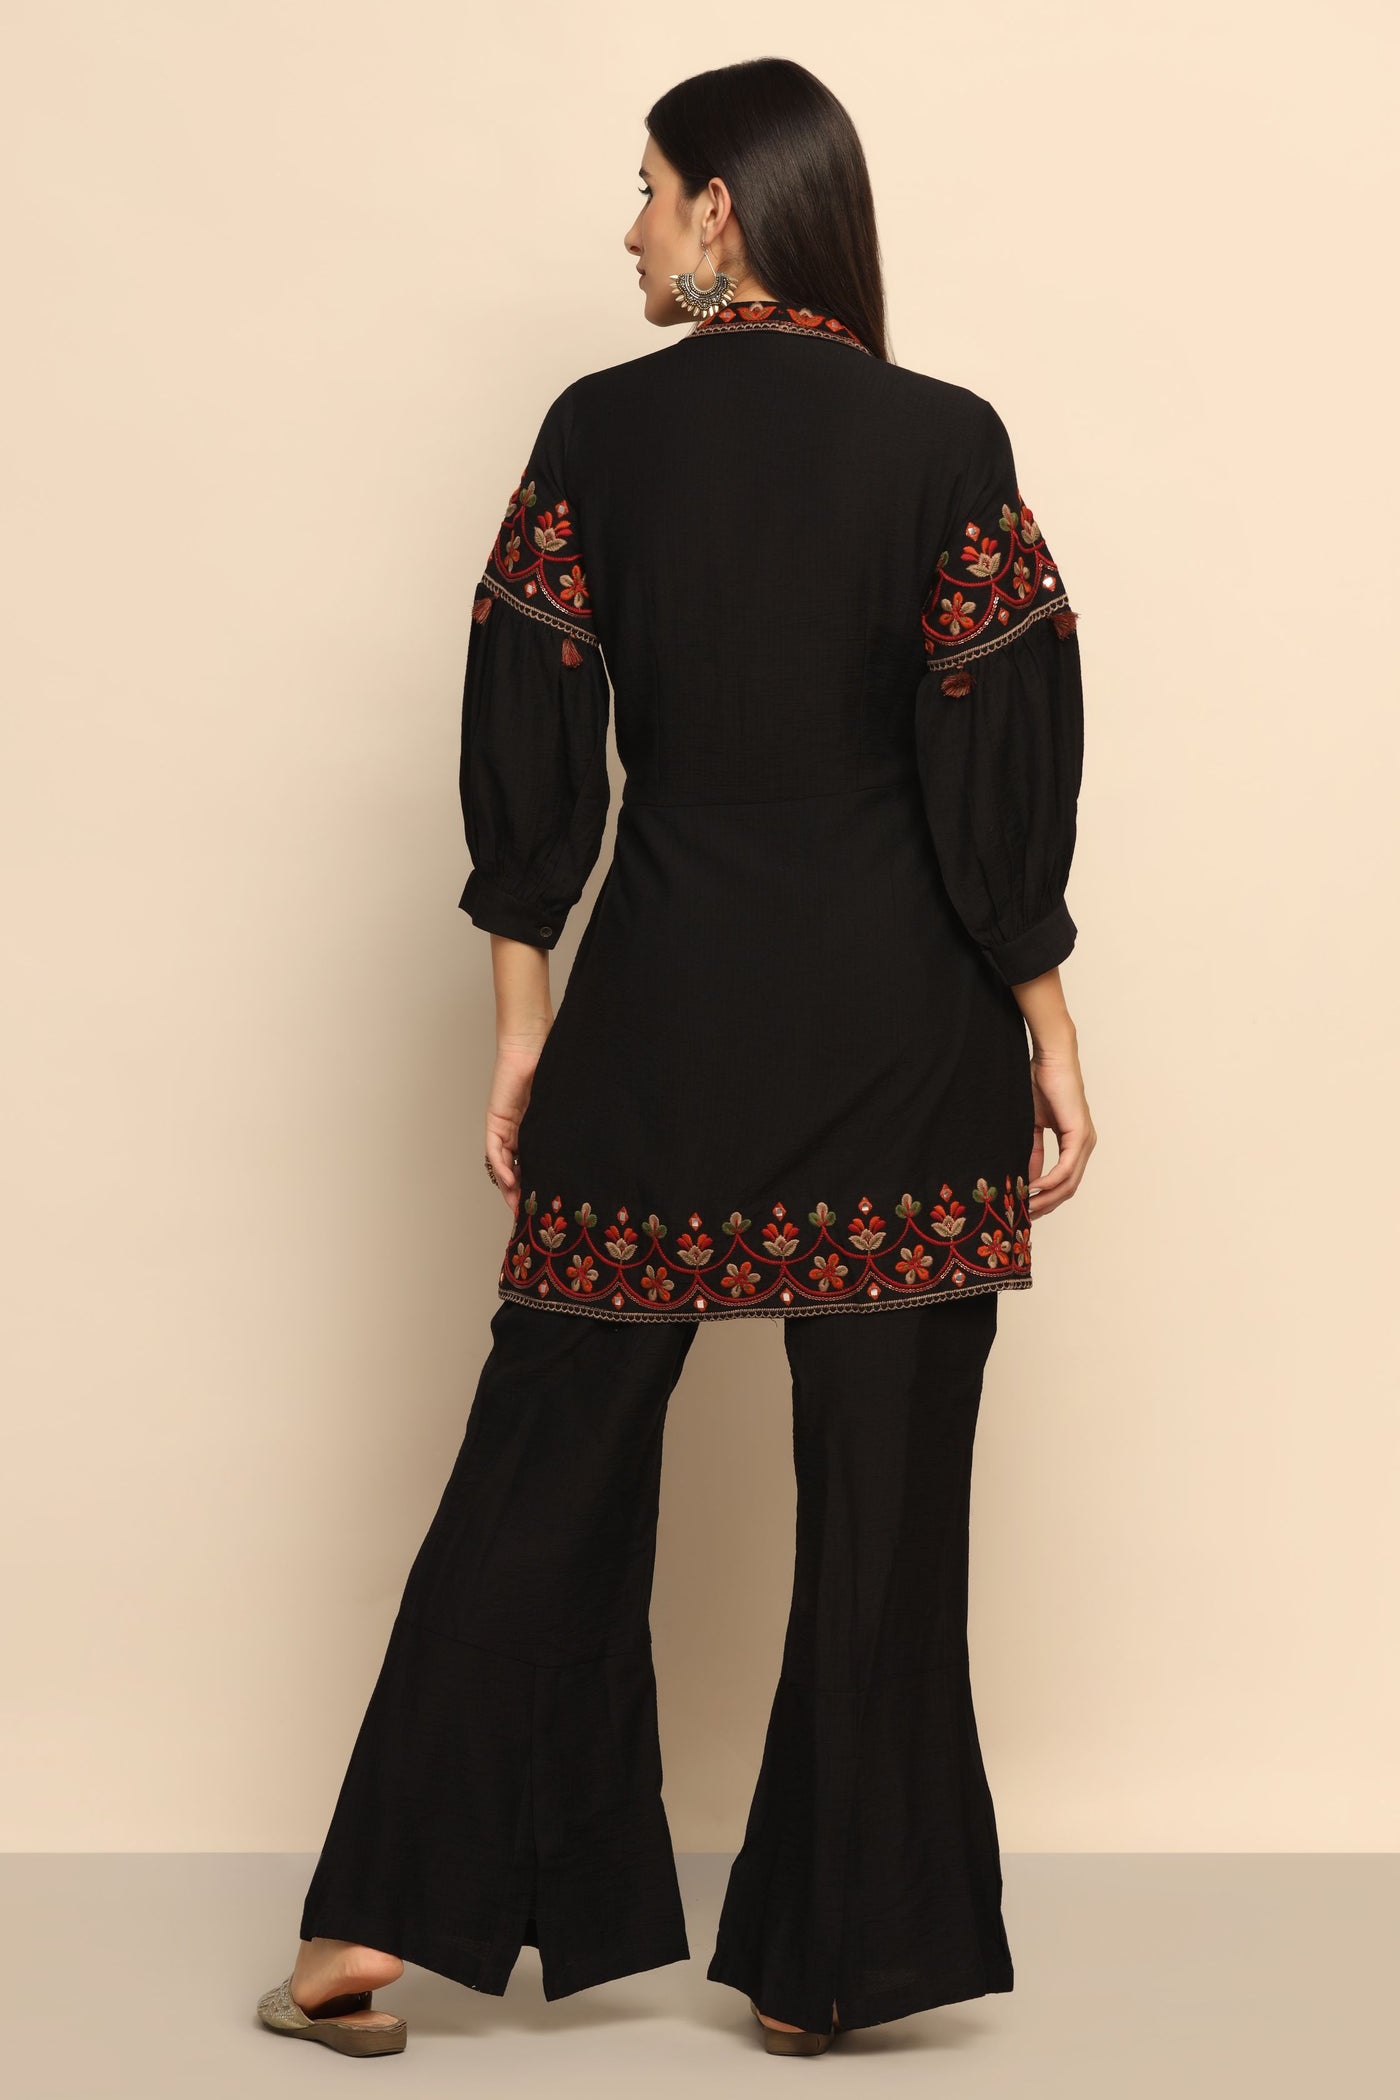 Charming Black Thread Work Tassel Dress - Embrace Effortless Style